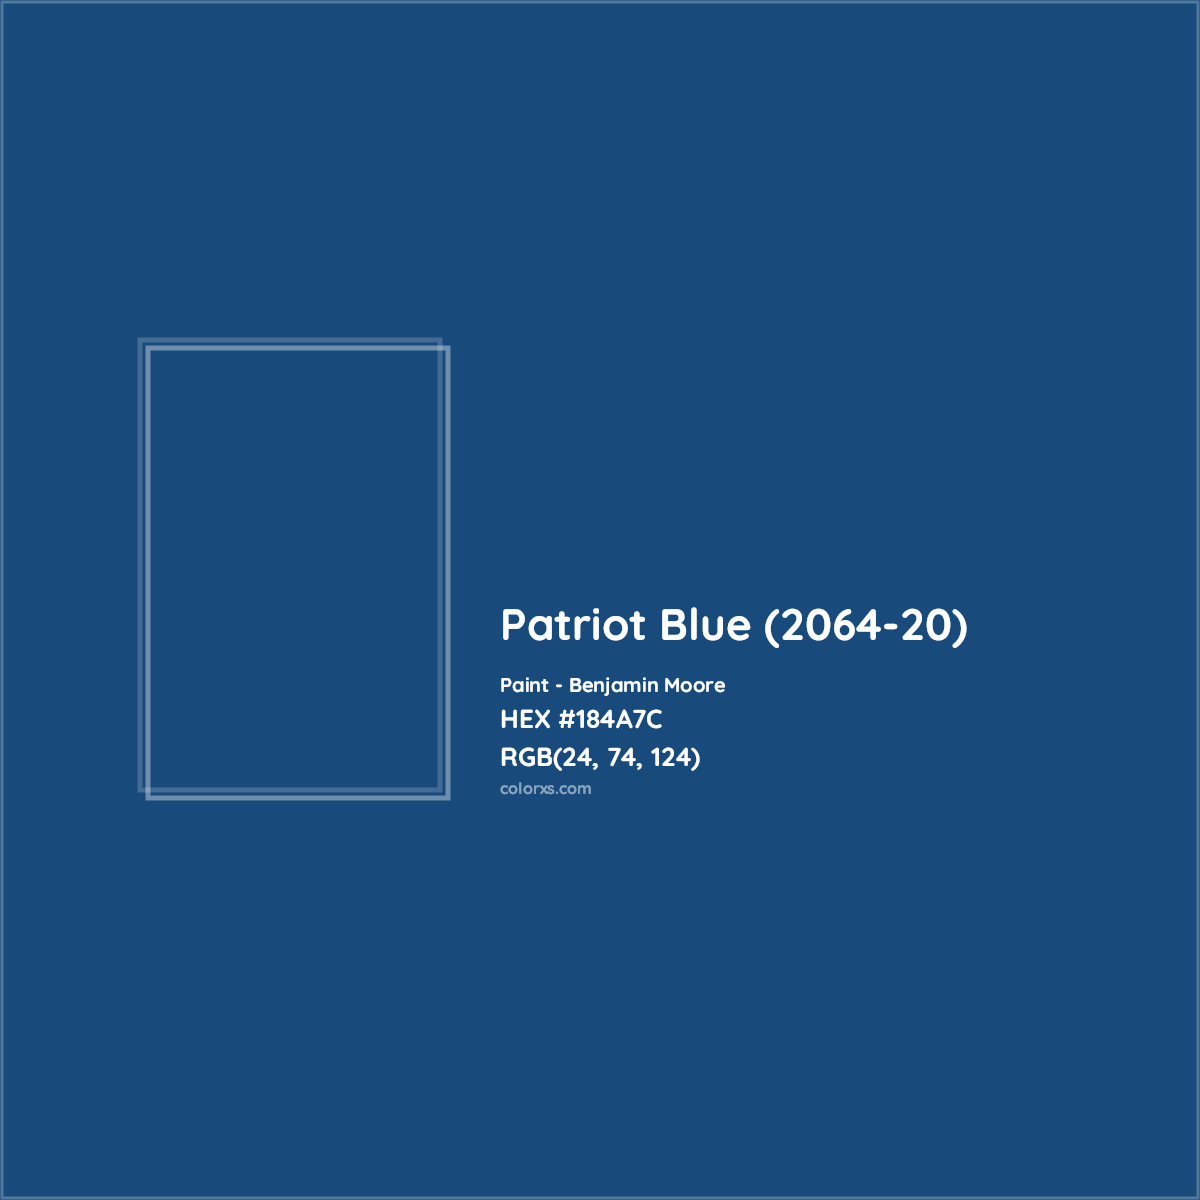 HEX #184A7C Patriot Blue (2064-20) Paint Benjamin Moore - Color Code